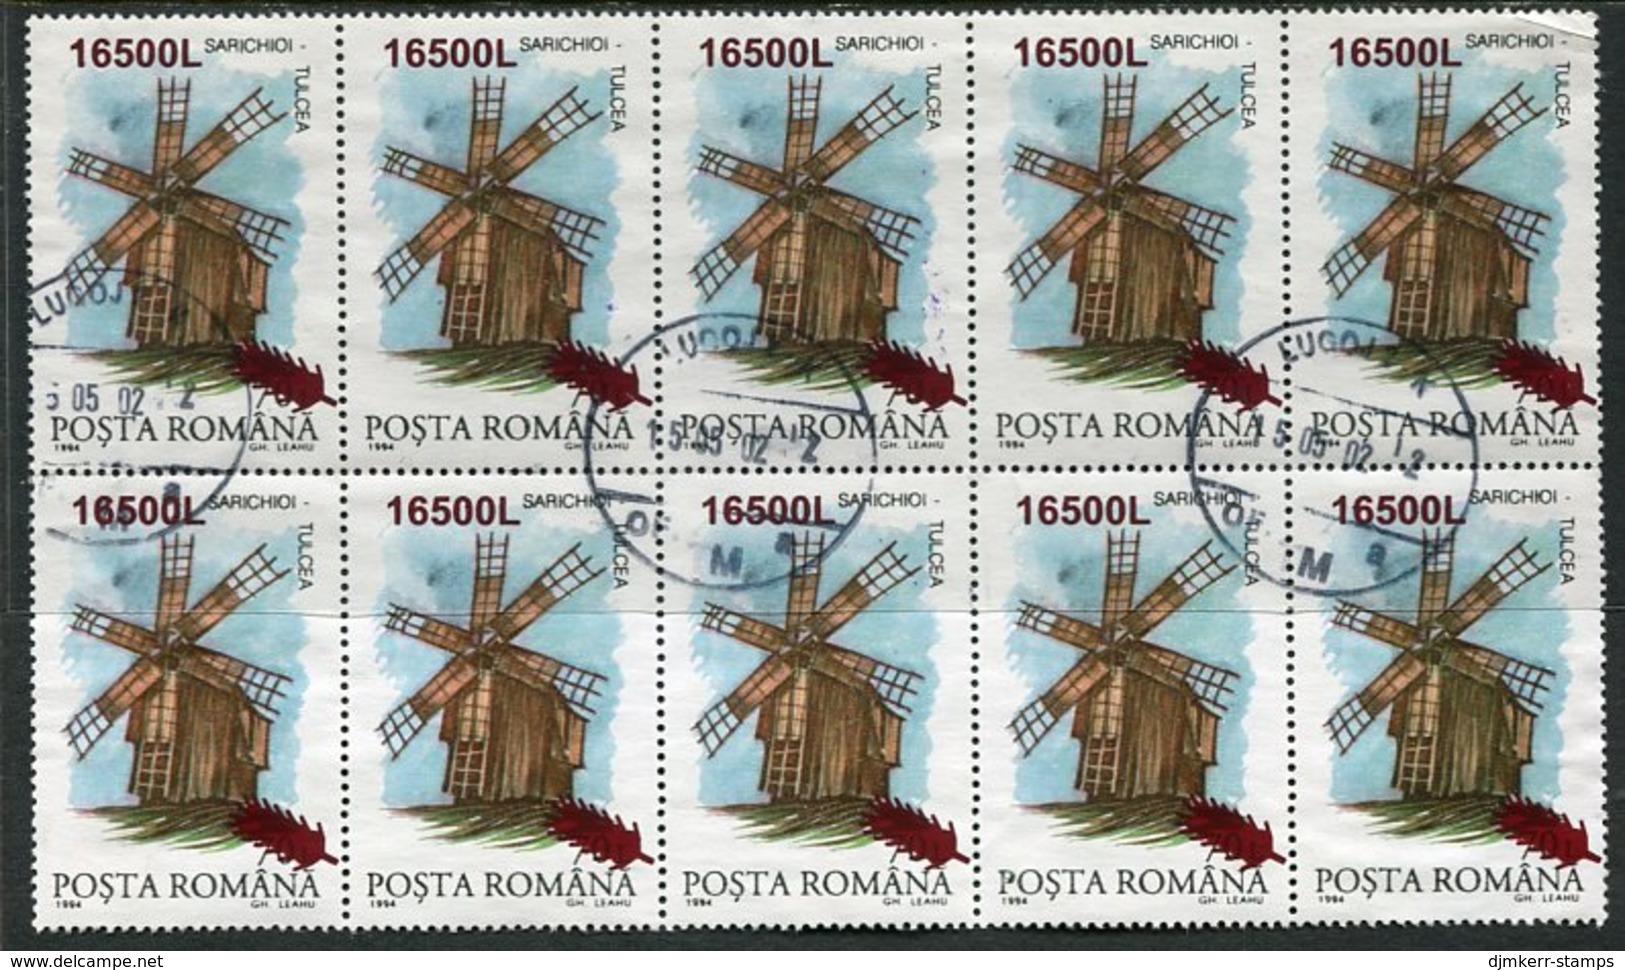 ROMANIA 2001 Windmill 70 L. Surcharged 16500 Block Of 10 Used.  Michel 5559 - Oblitérés